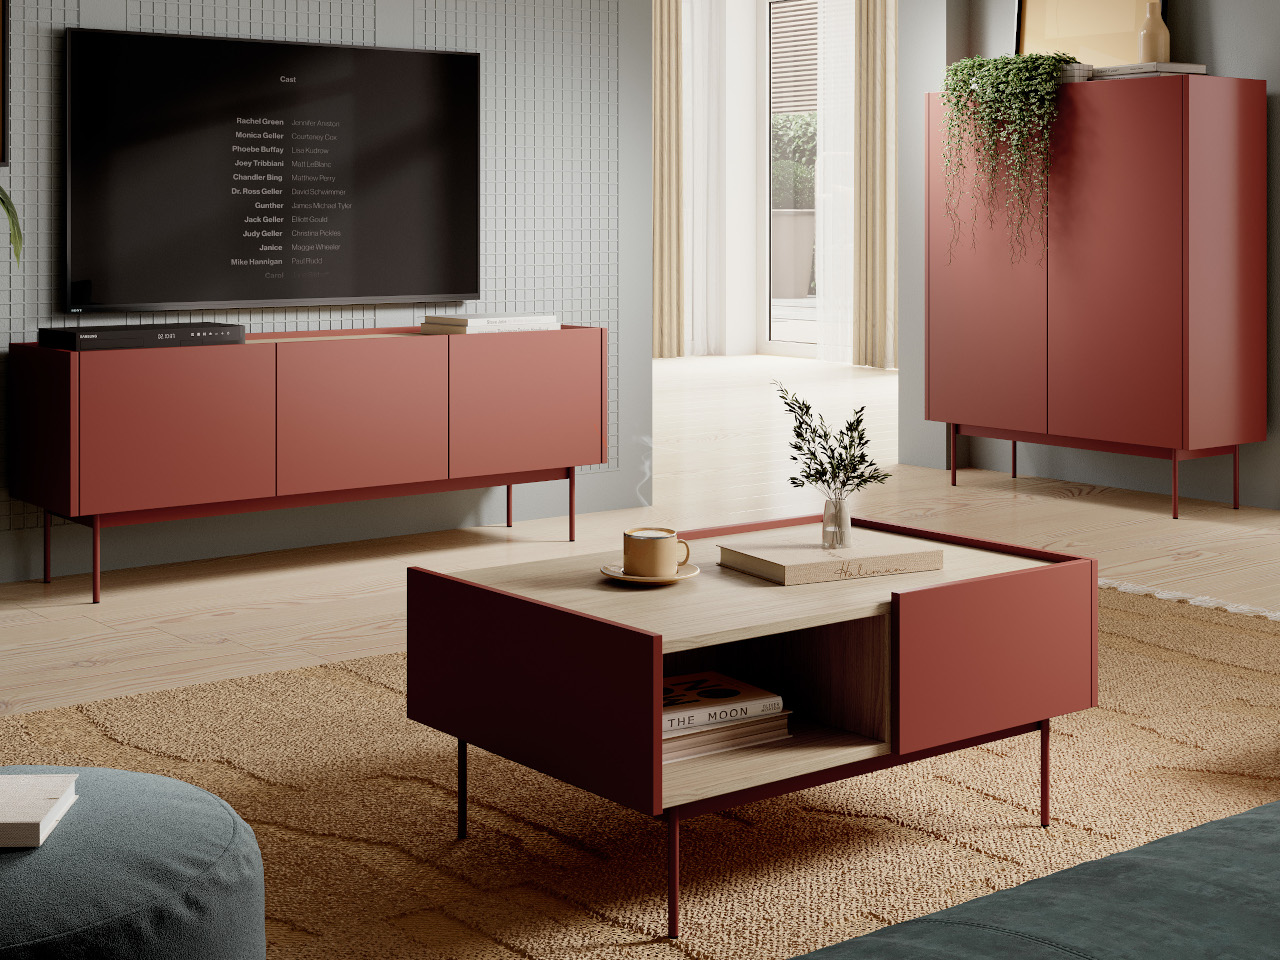 TV cabinet COLOUR 01 ceramic red / linea oak